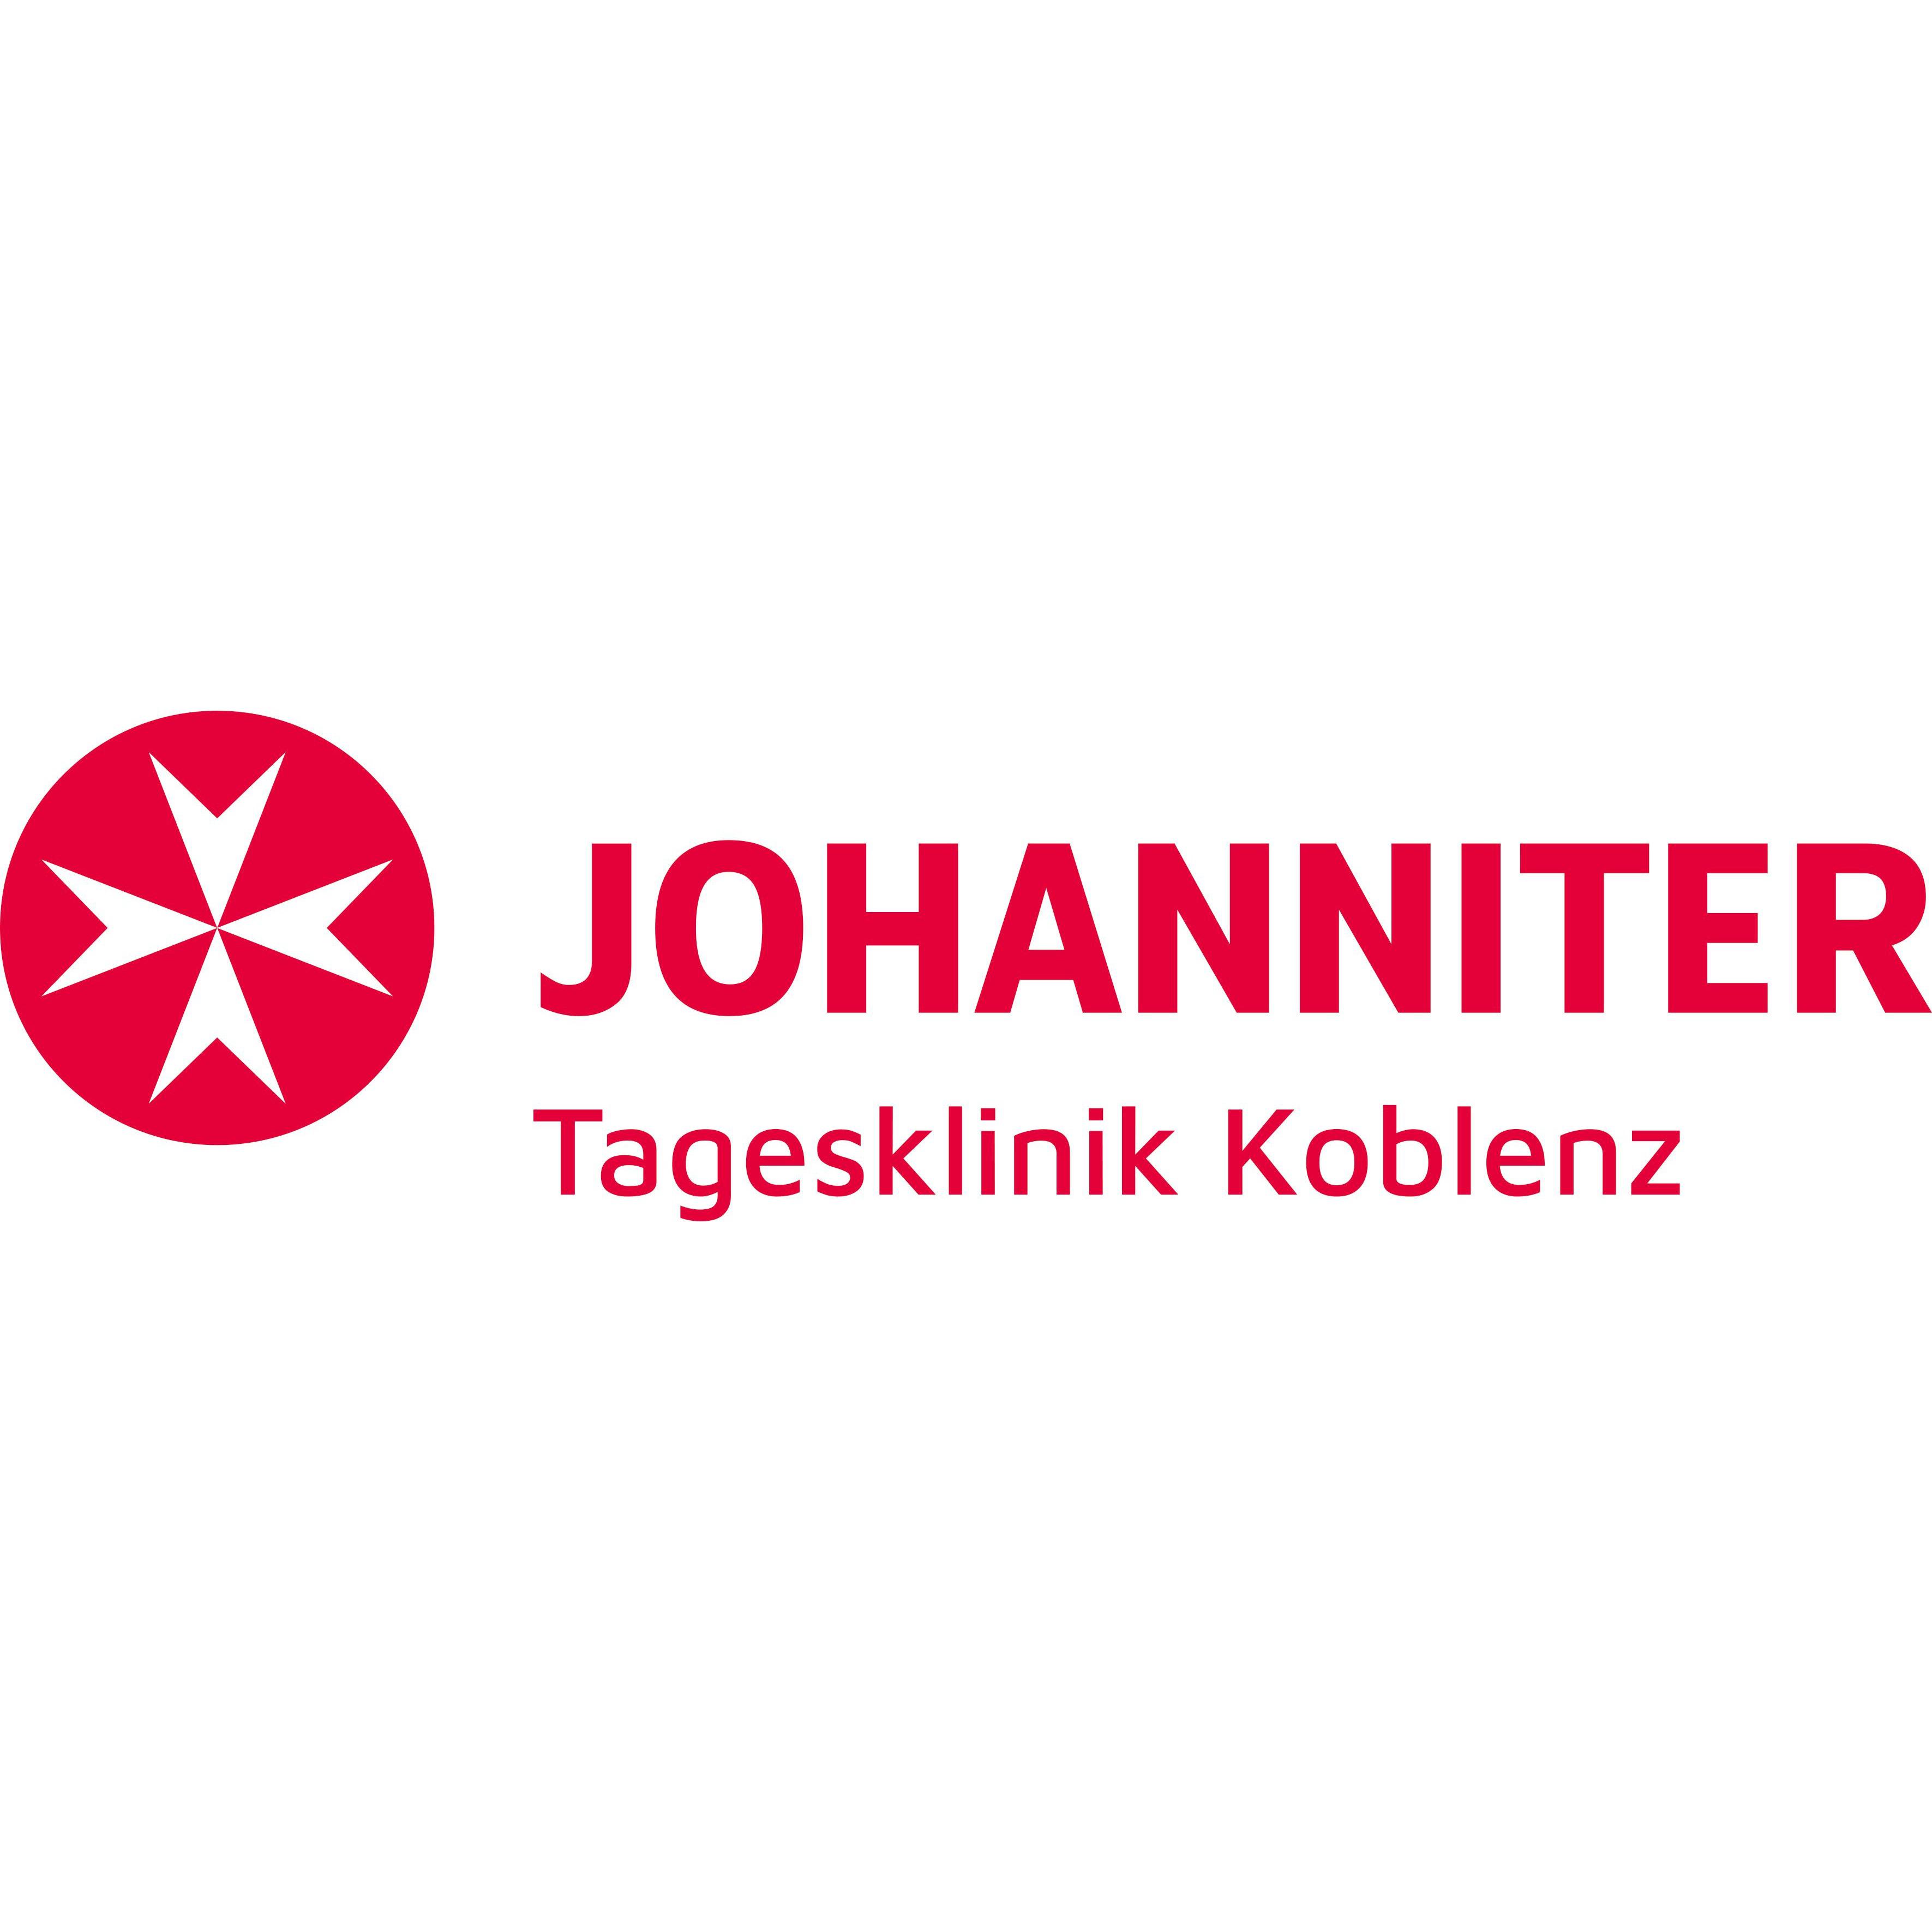 Johanniter-Tagesklinik Koblenz GmbH Logo